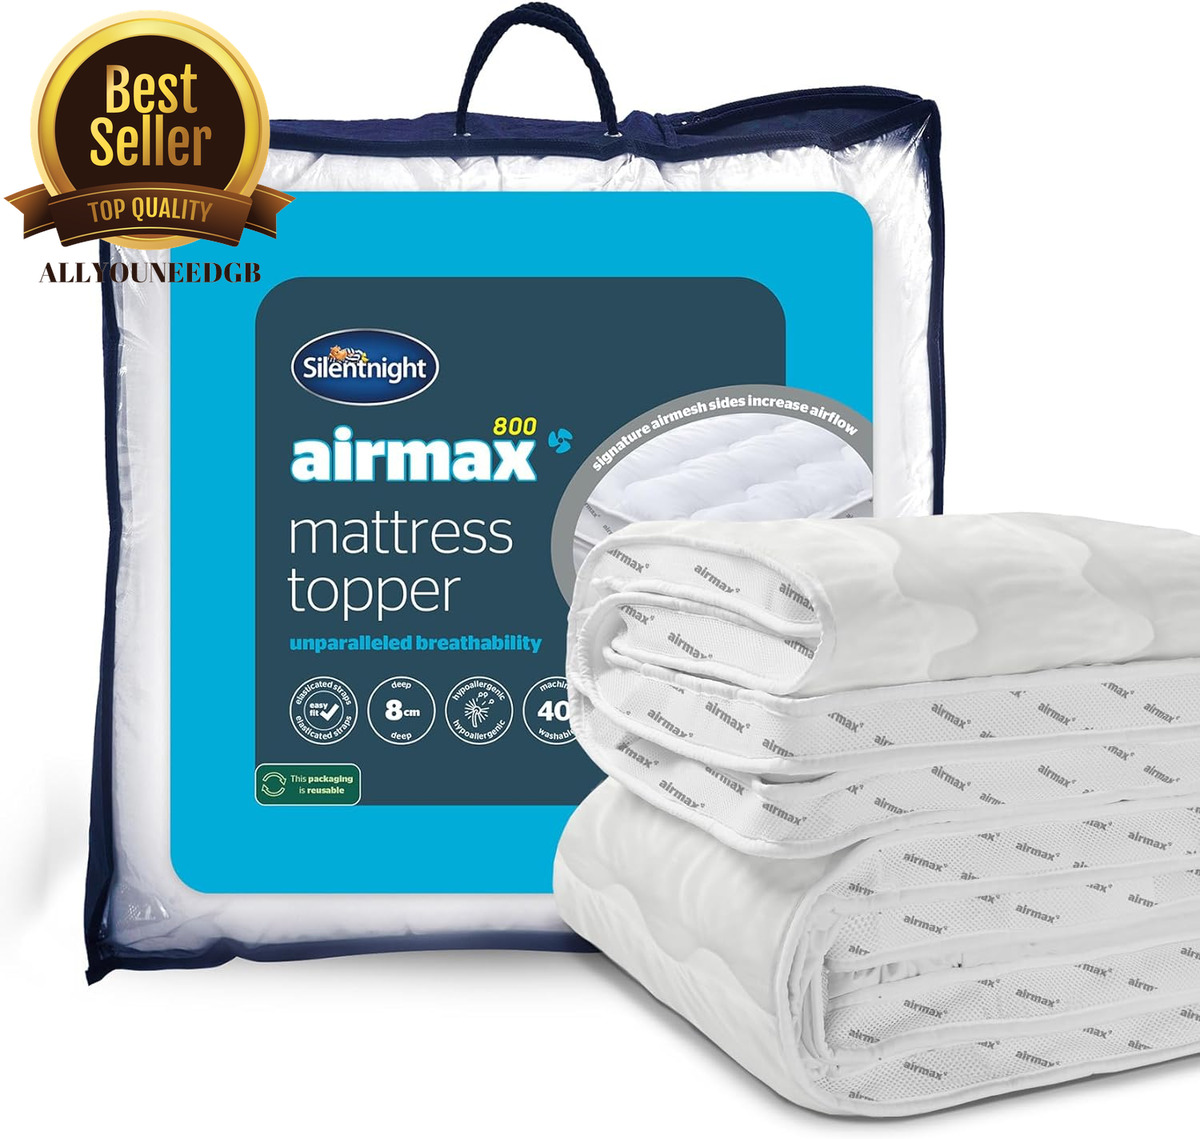 airmax 800 mattress topper double